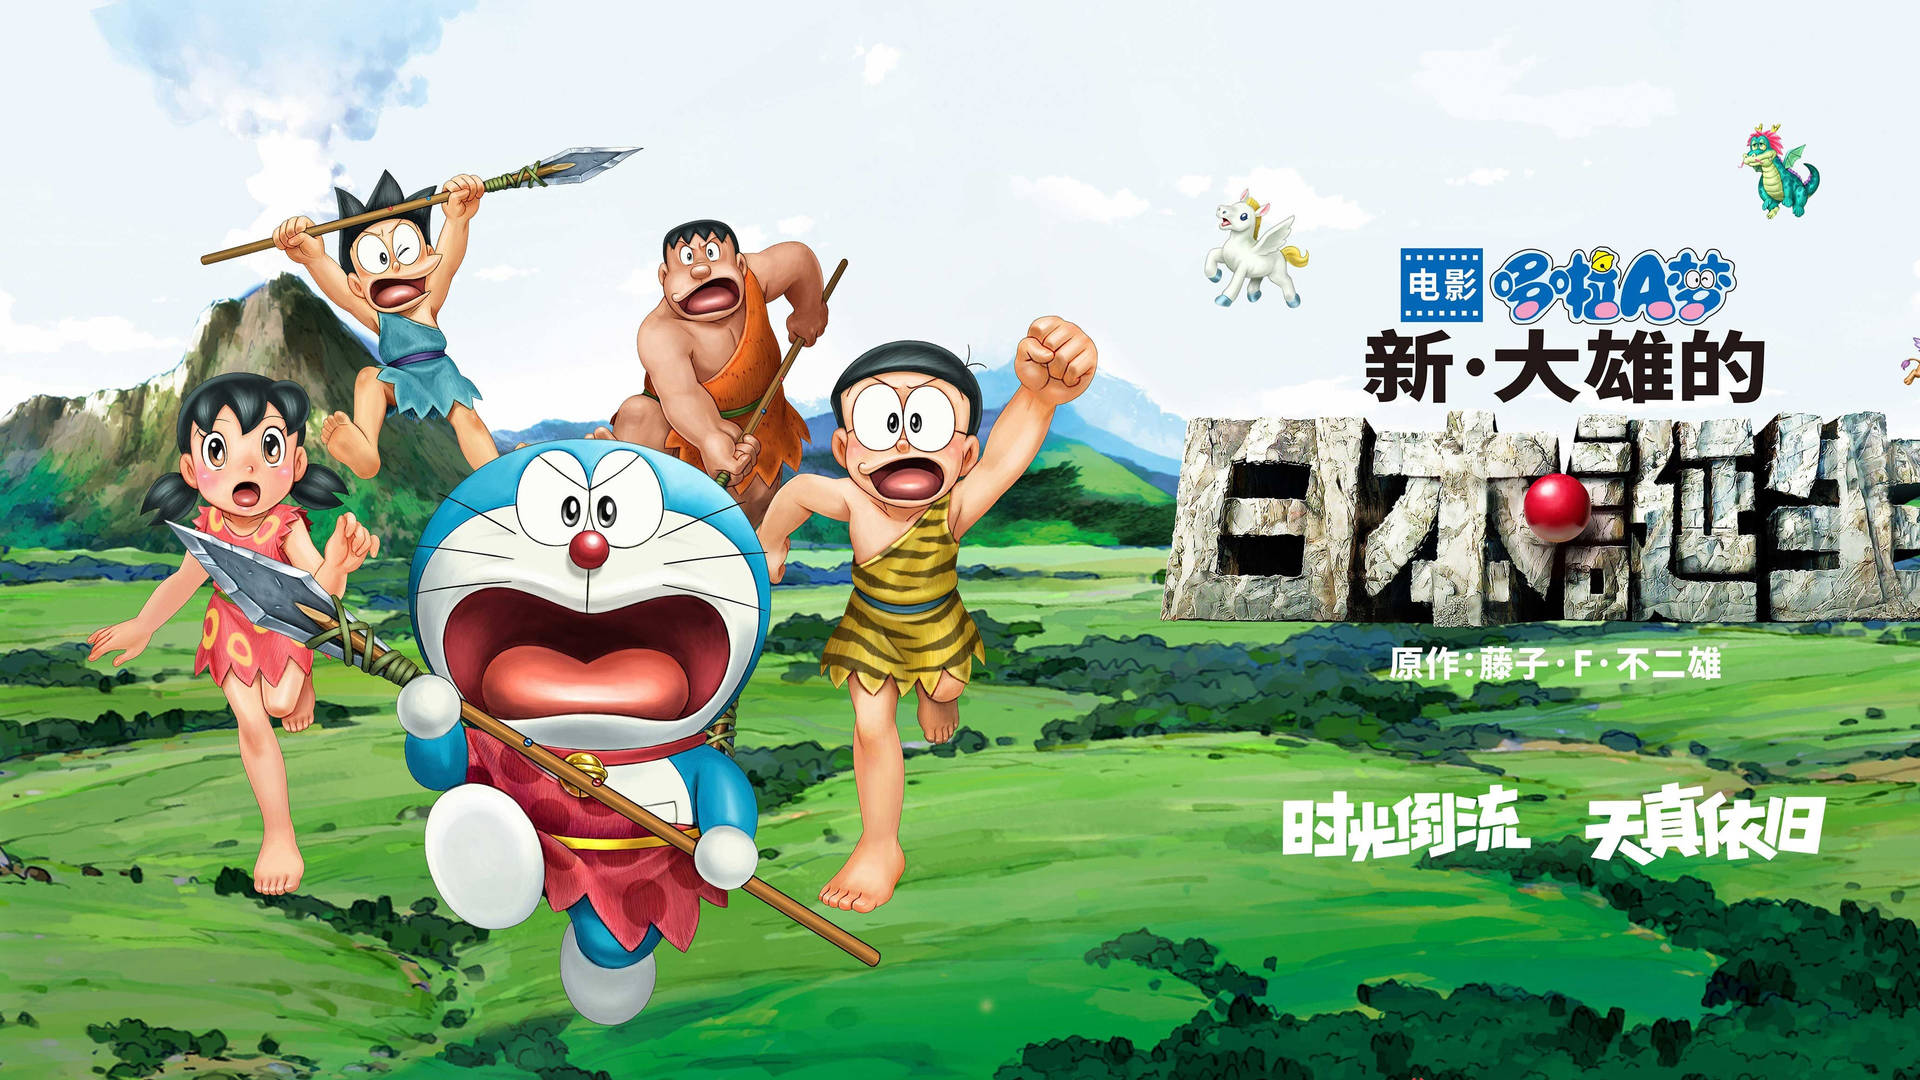 Doraemon In Rural Area Wallpaper